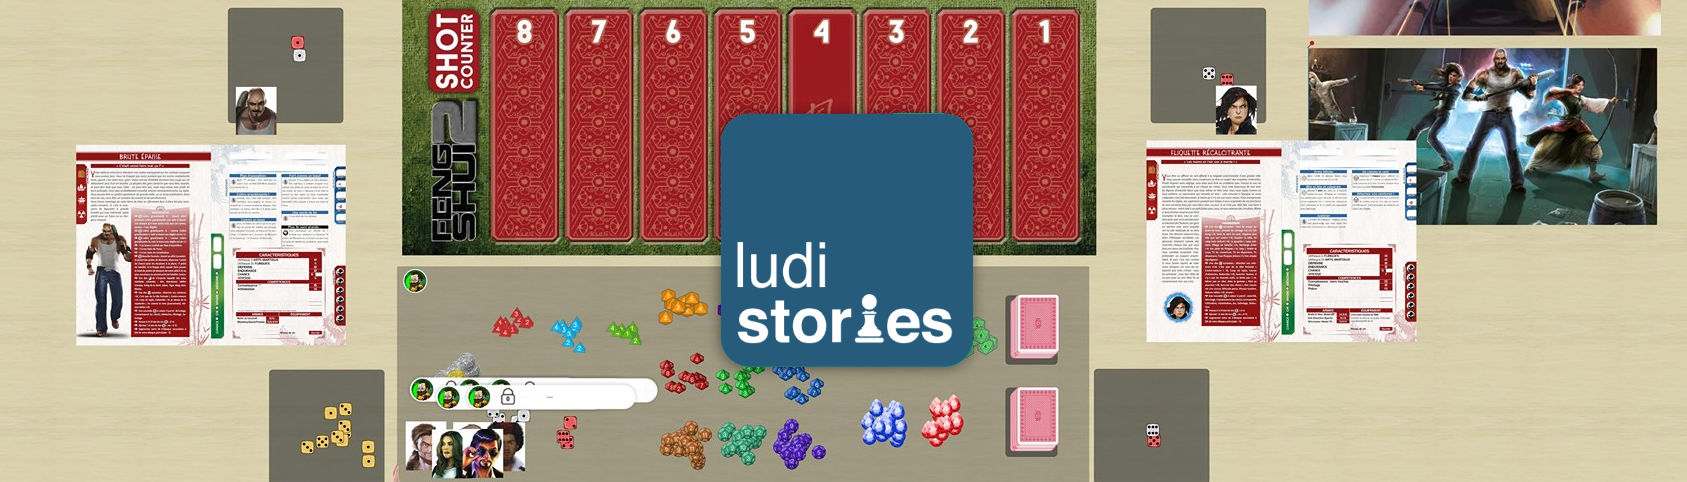 Ludi Stories 2020